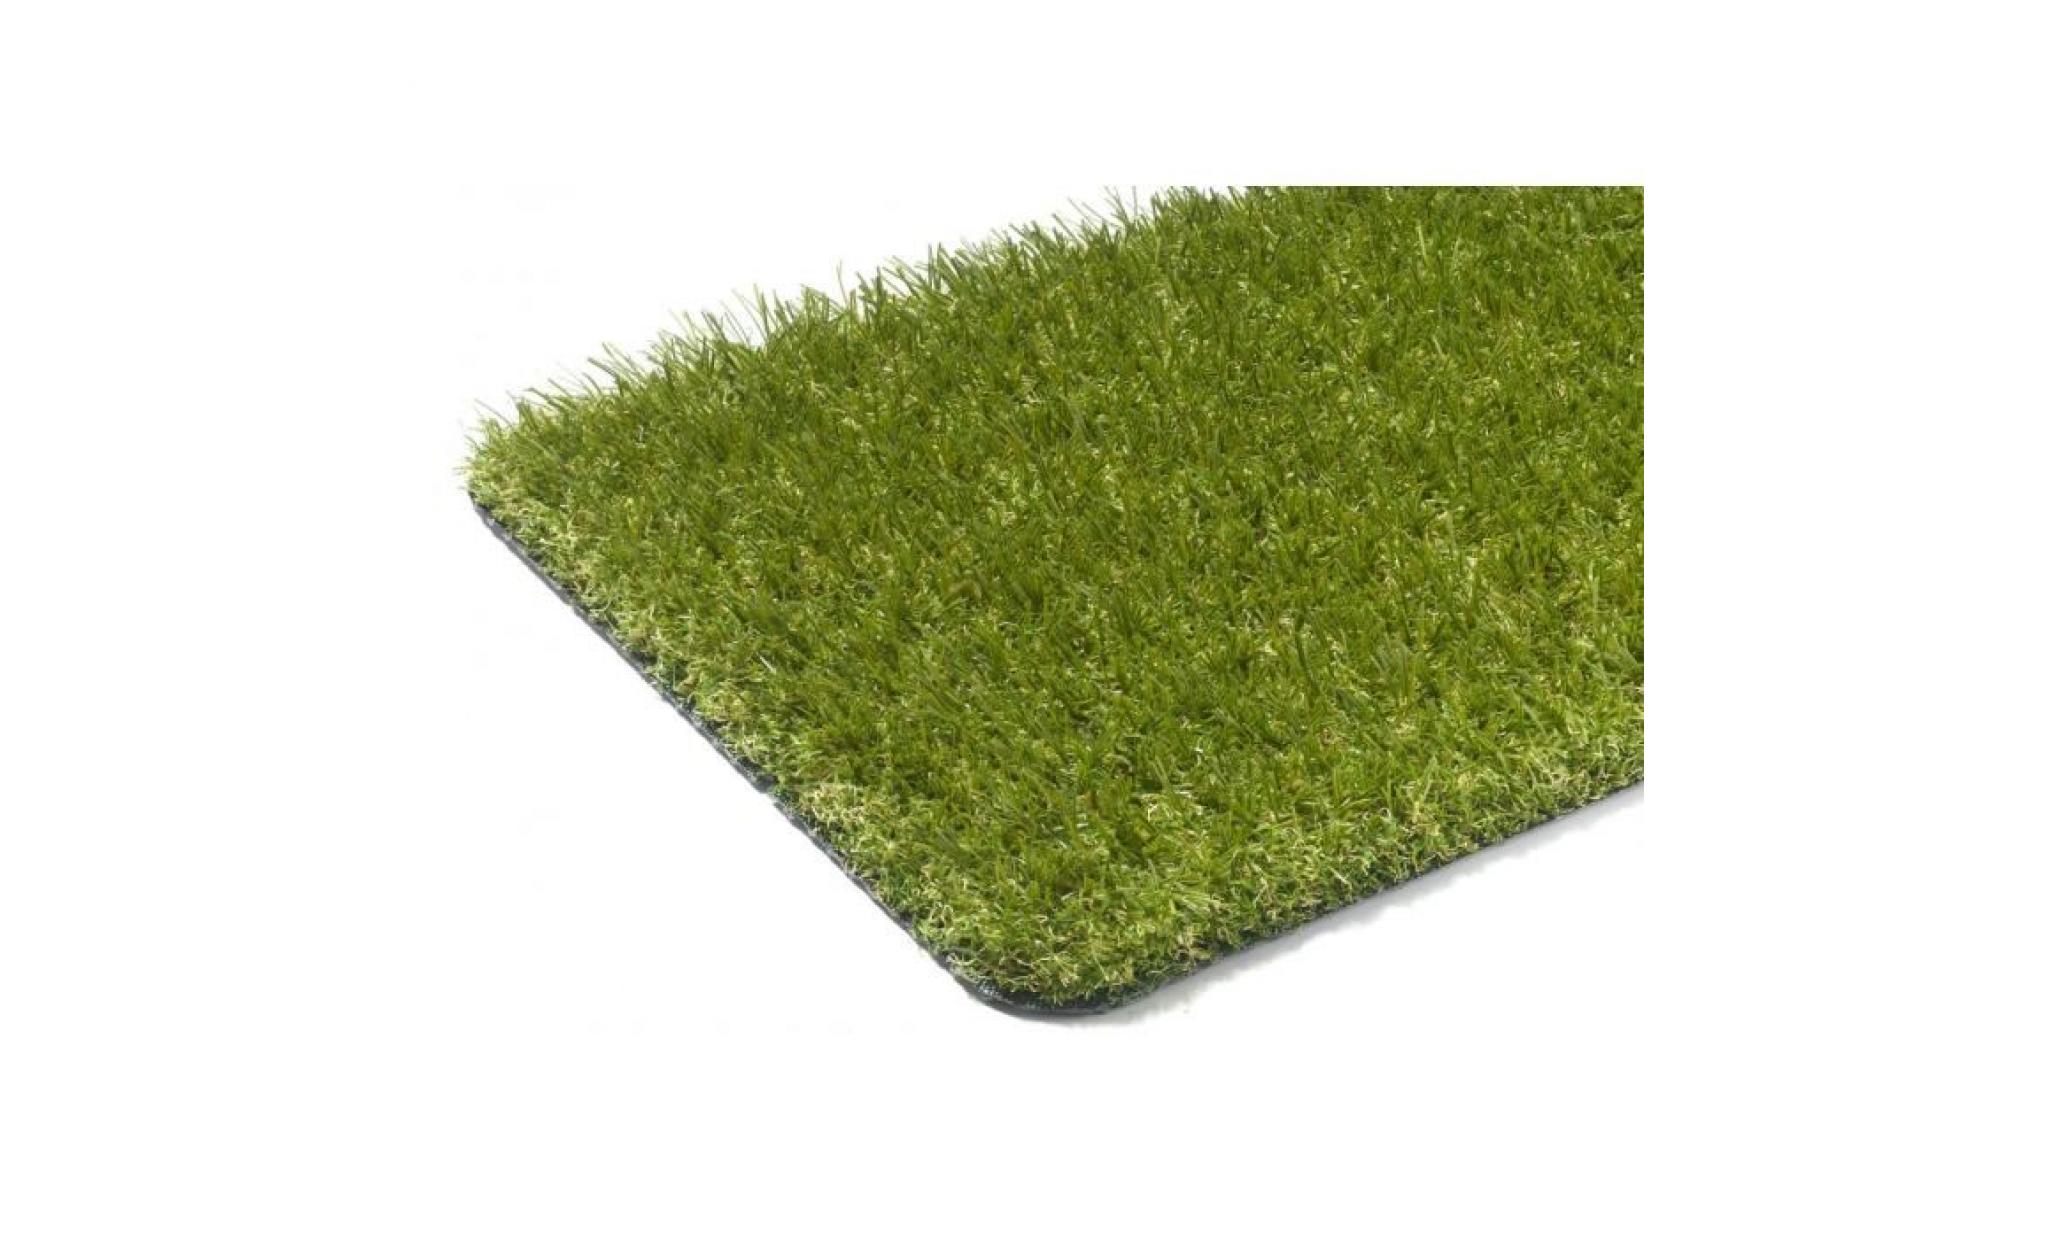 wembley   tapis type luxe gazon artificiel – pour jardin, terrasse, balcon   vert  [200x250 cm]